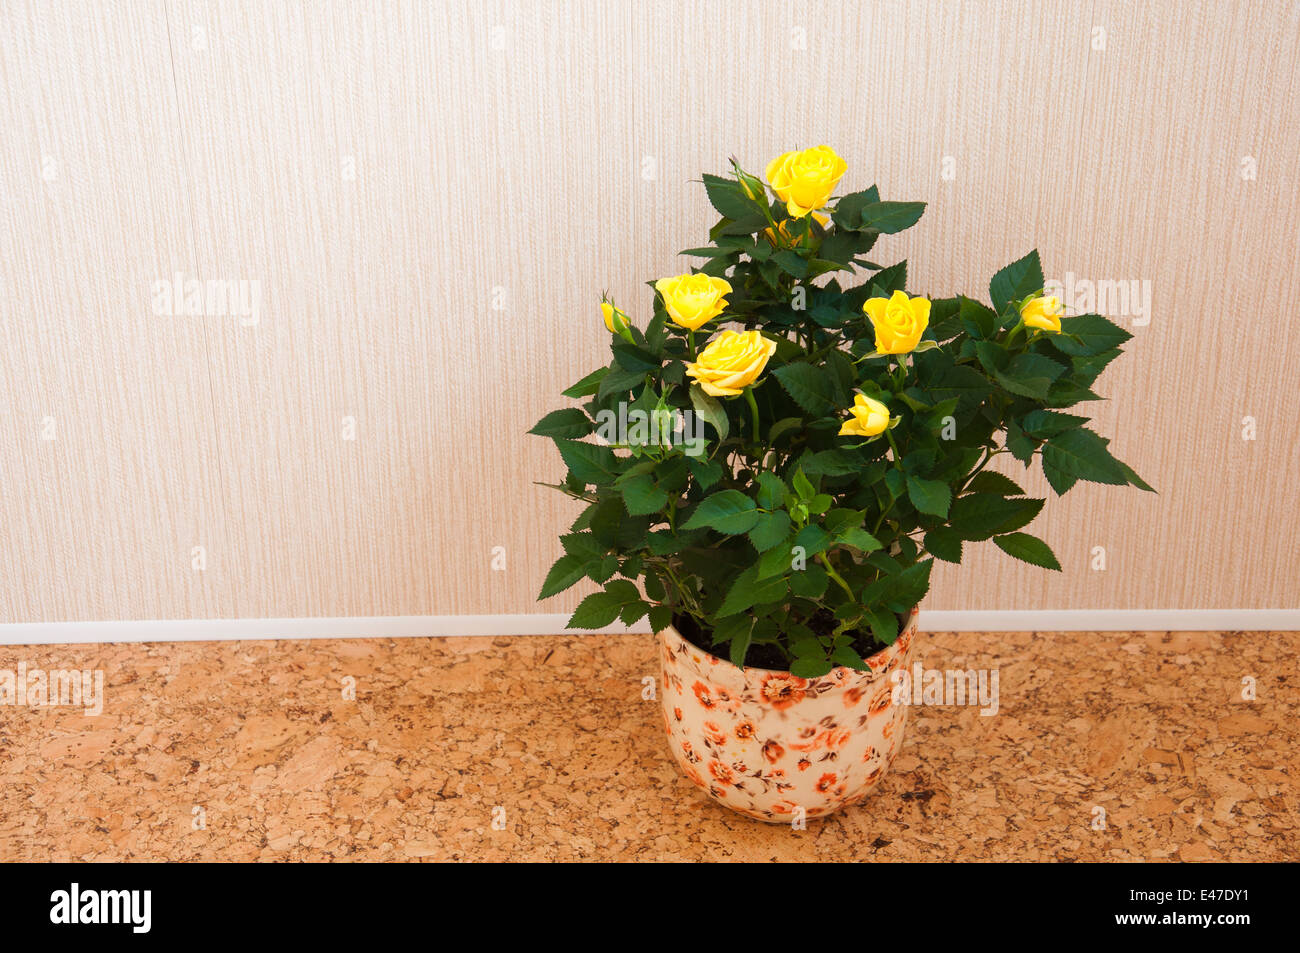 indoor plant rose yellow pot home flowering flowers hobby interior design one bud flower nobody Stock Photo